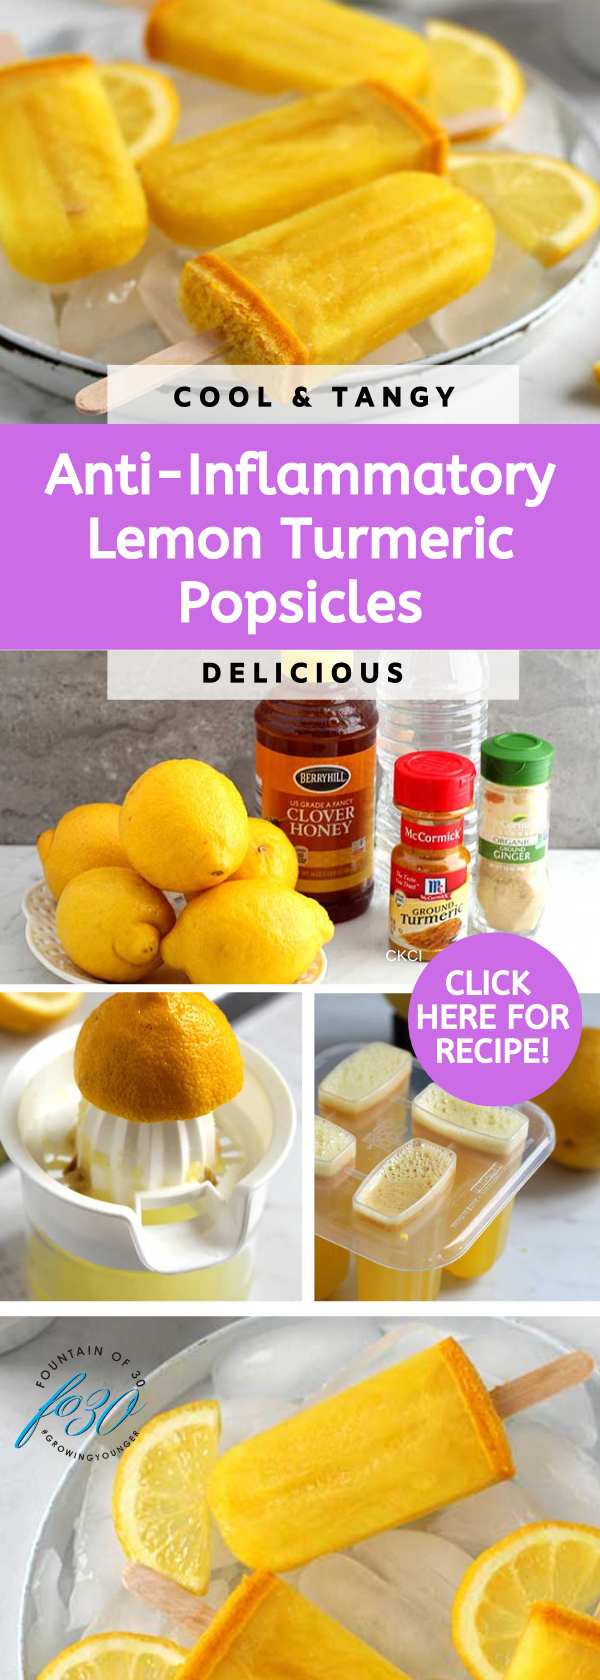 frozen treats lemon popsicles recipe fountainof30